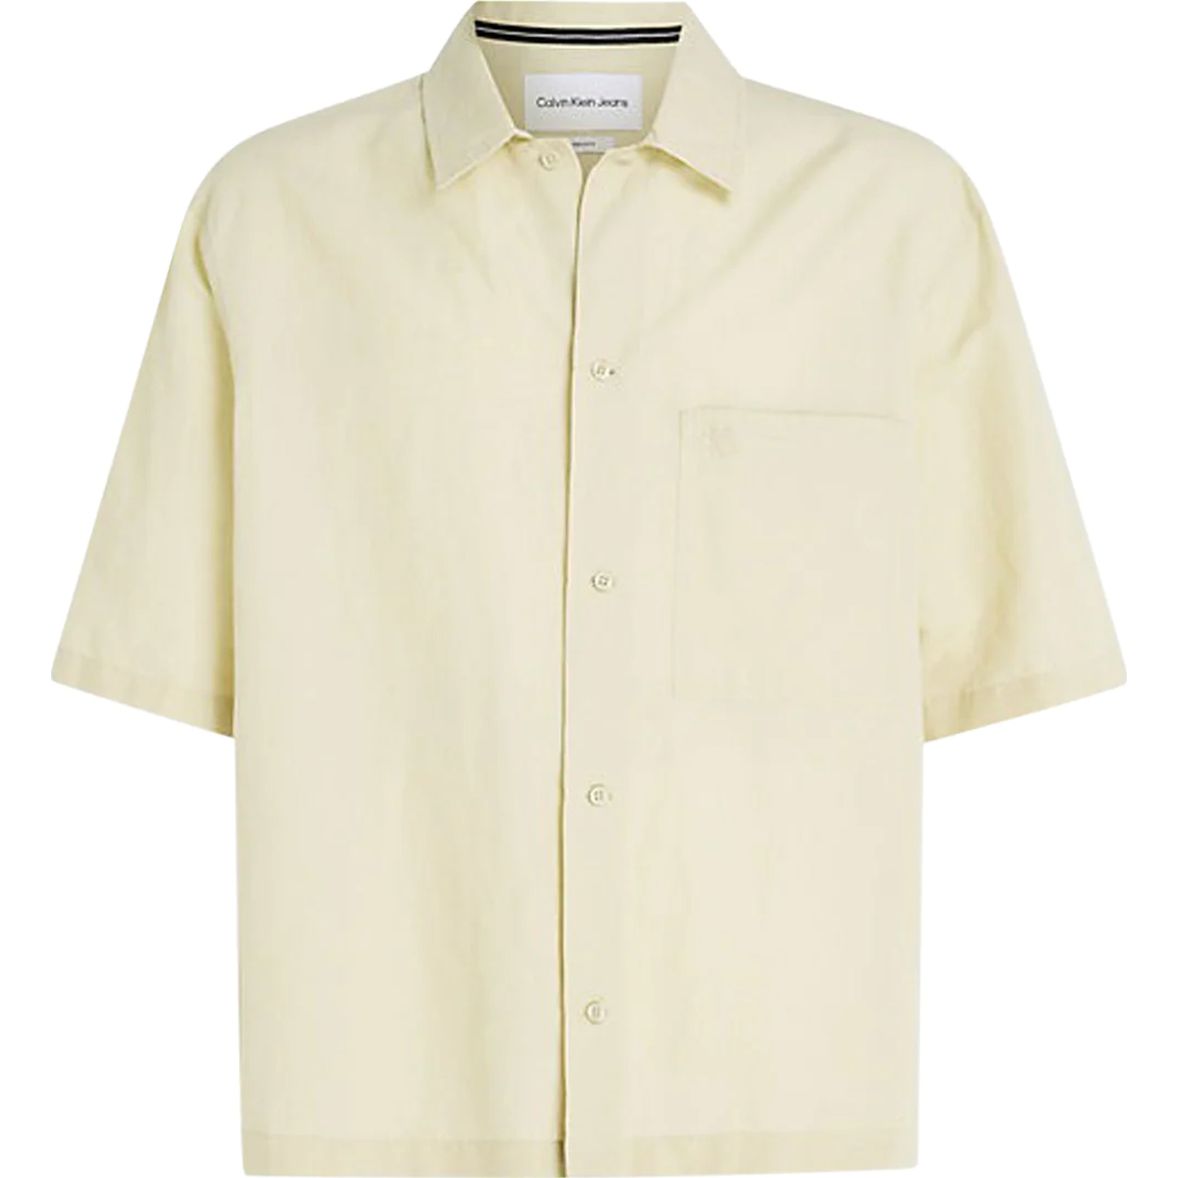 CALVIN KLEIN JEANS marškiniai trumpomis rankovėmis vyrams, Žalia, S/s shirt